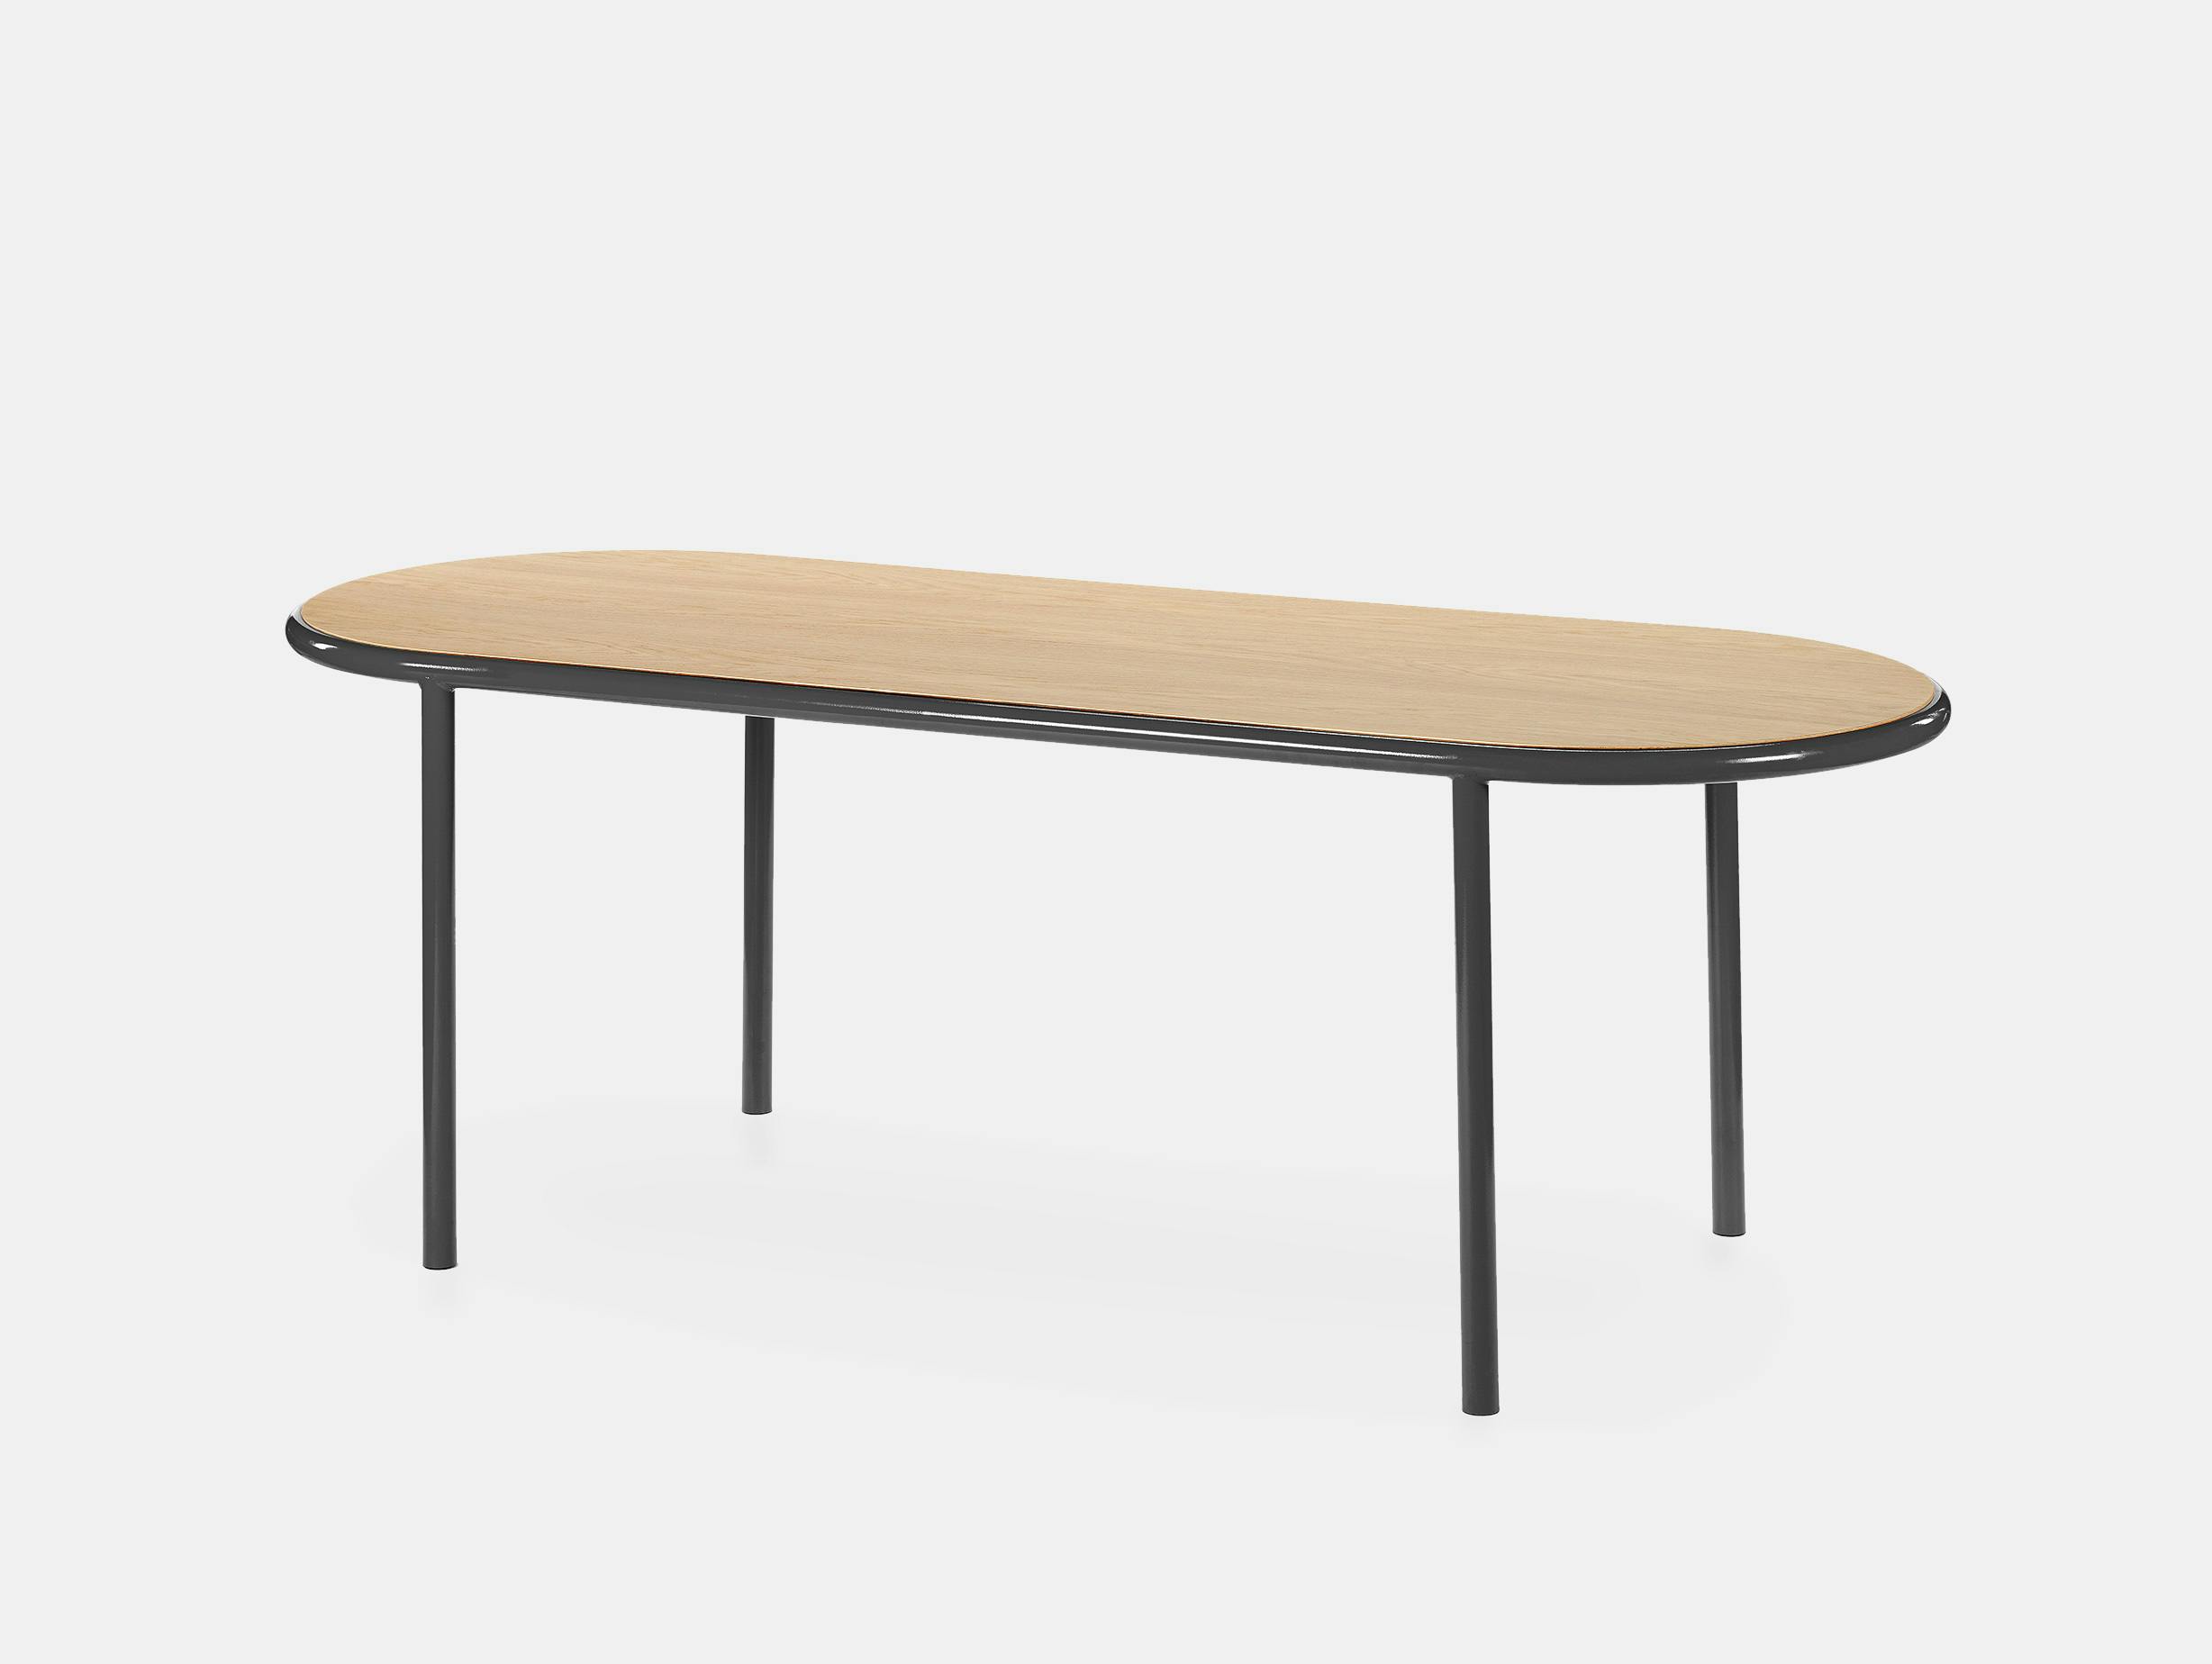 Muller van severen wooden table oval black oak